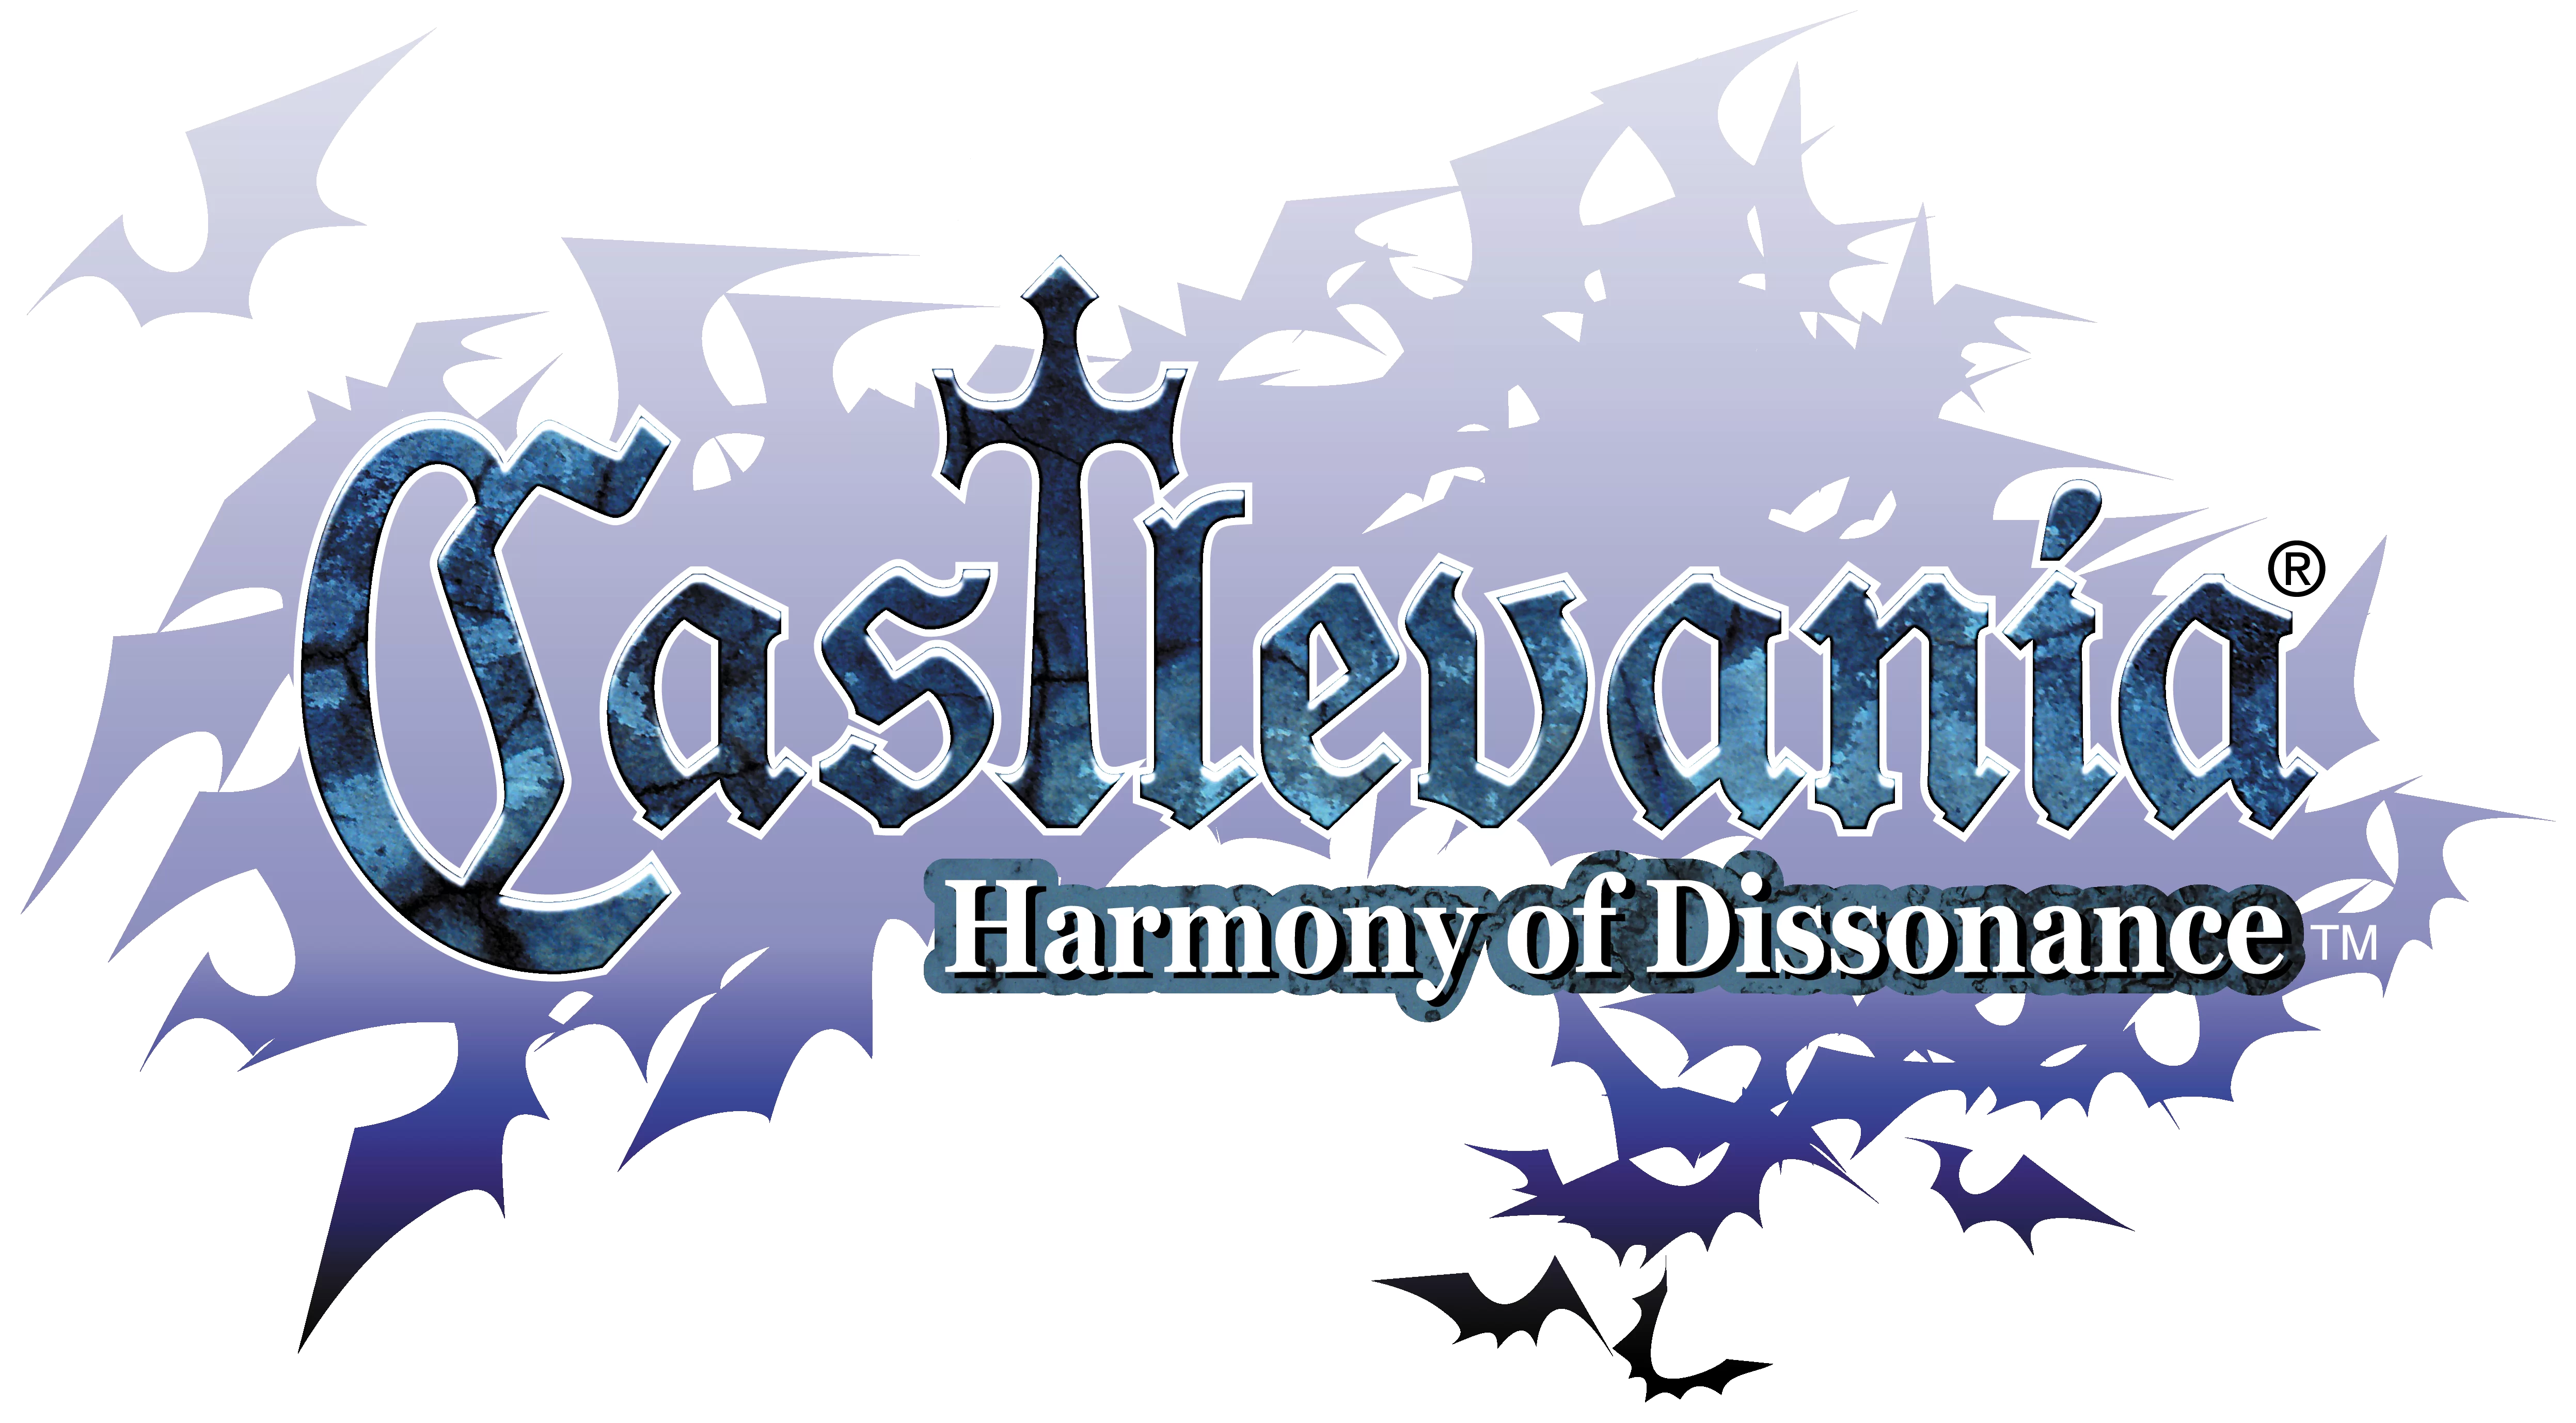 Castlevania logo